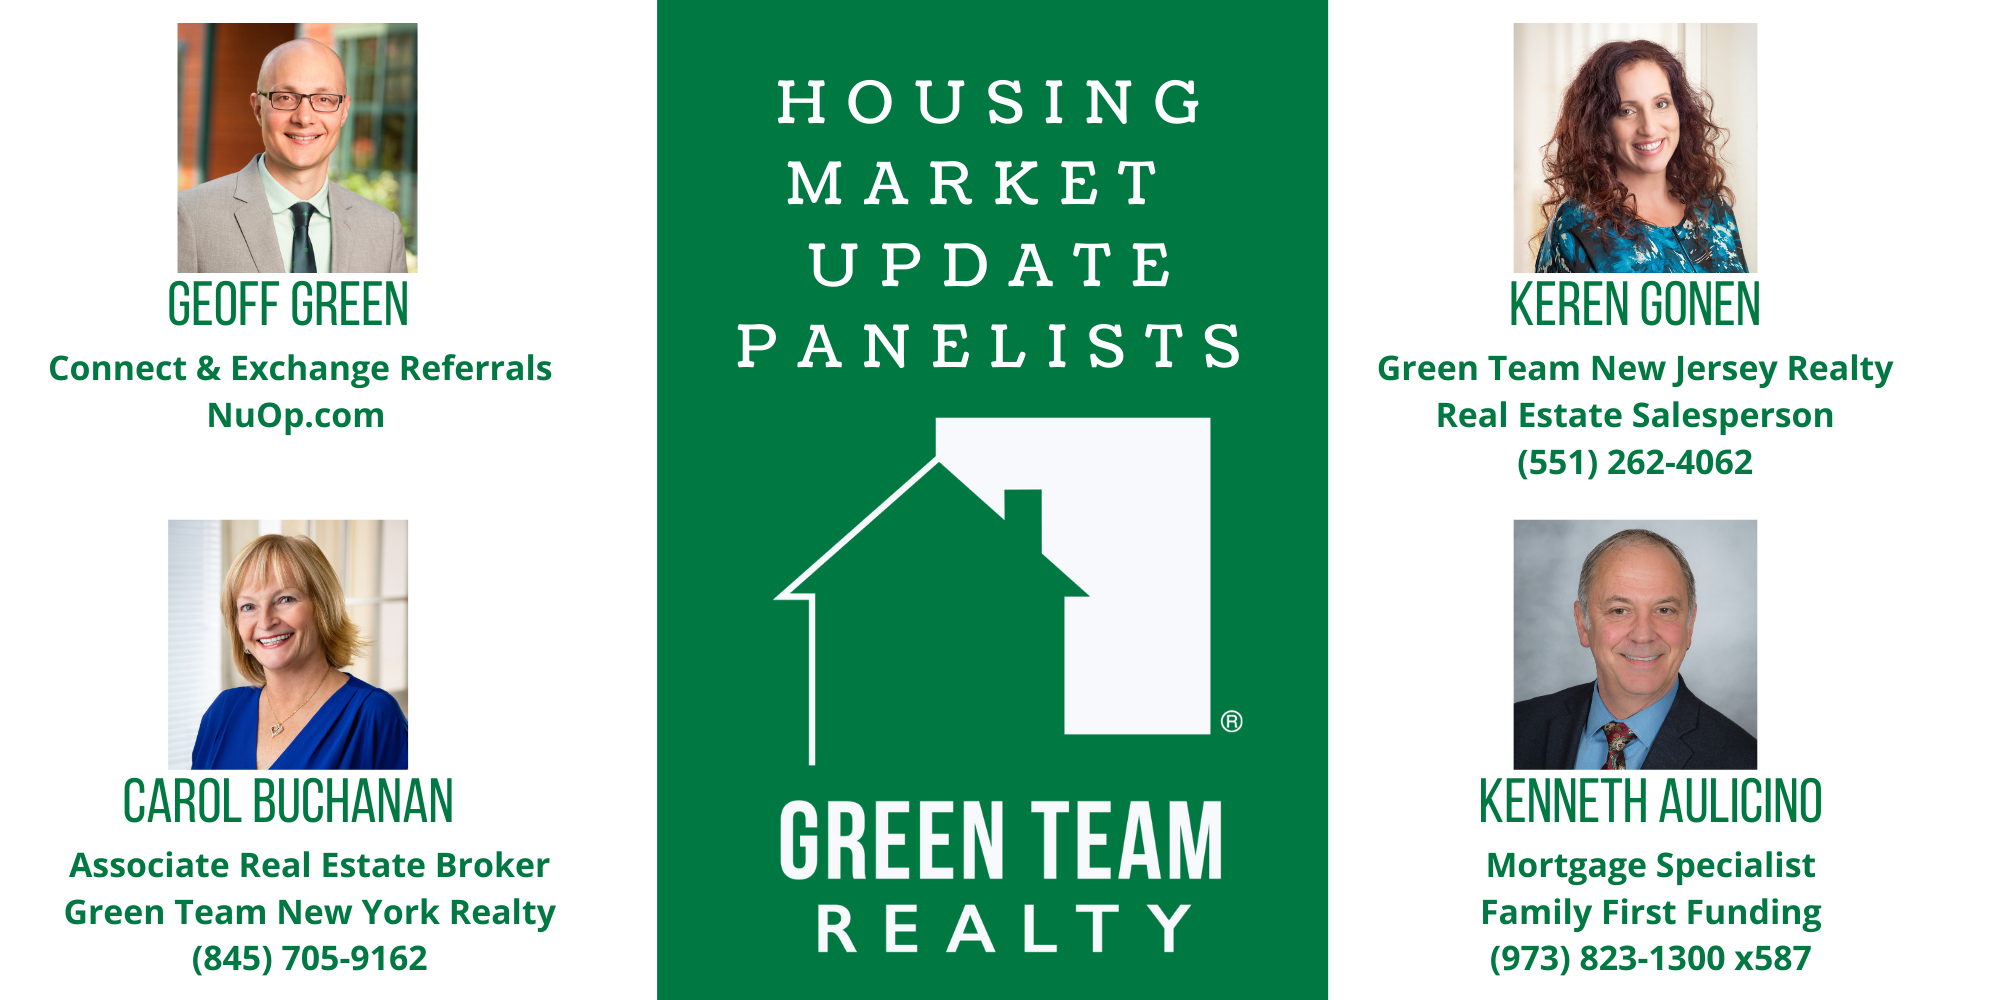 Green Team Realty March 2021 Housing Market Update